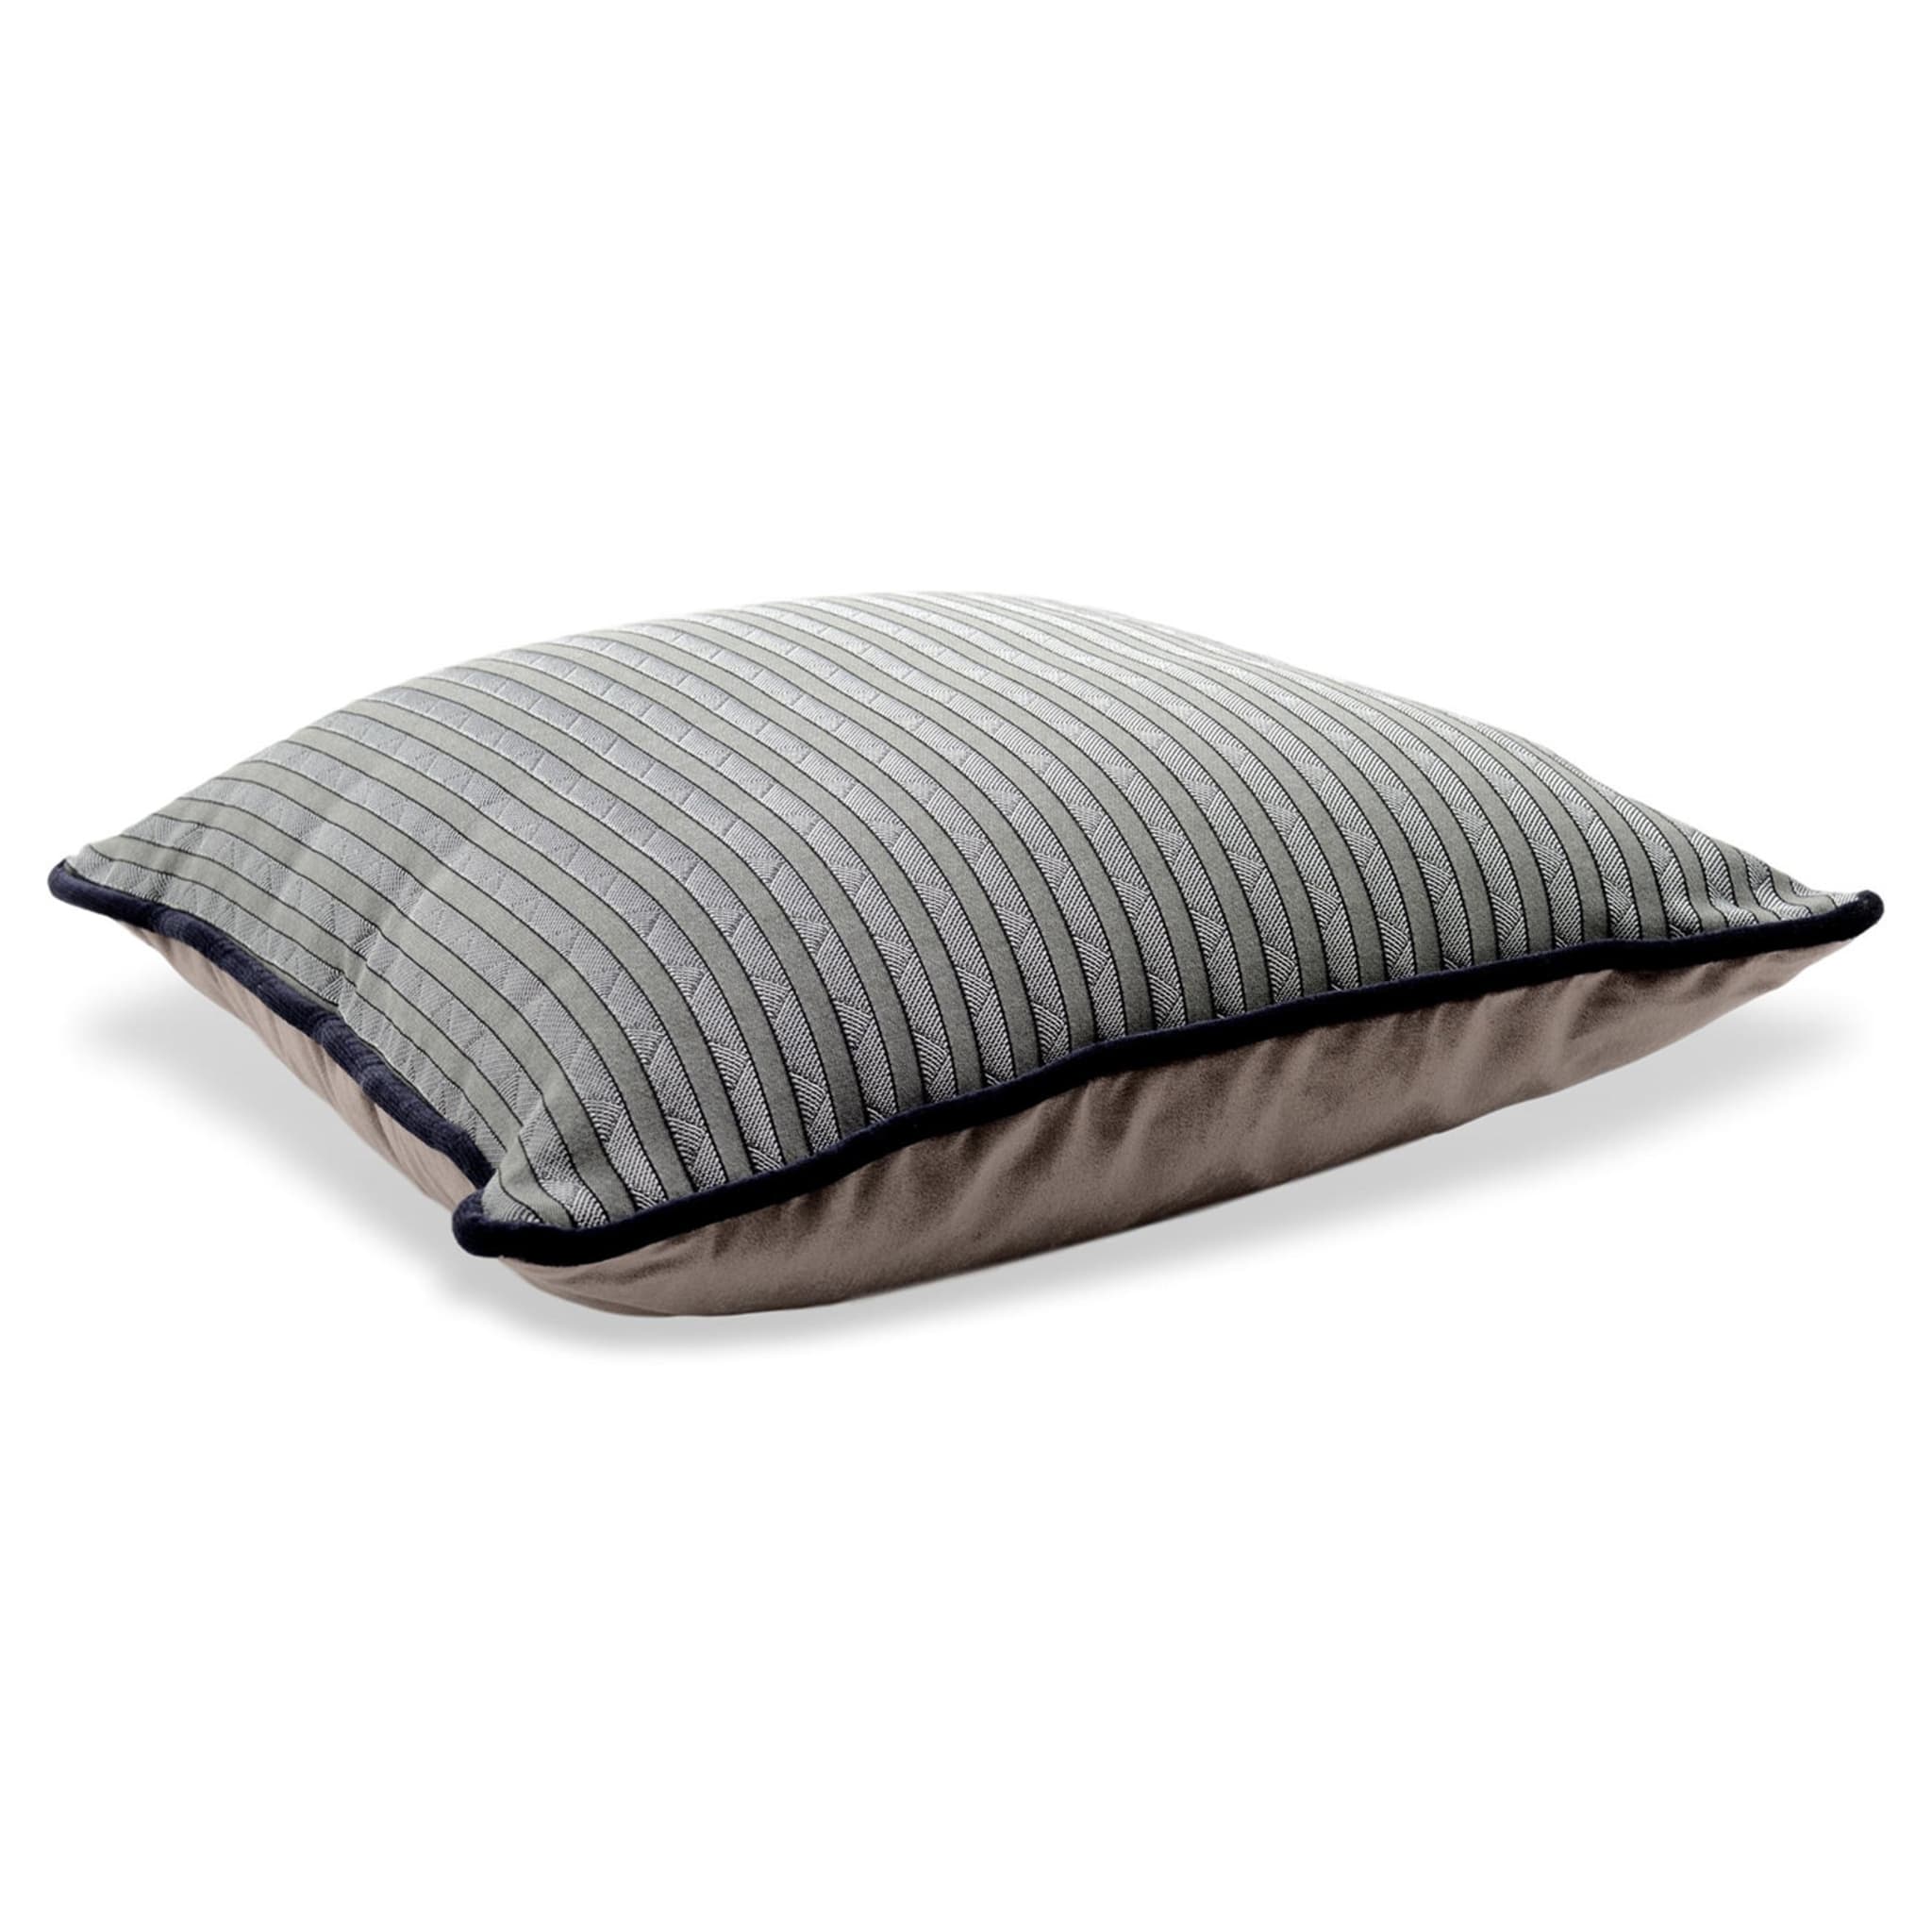 Square Carré Cushion in striped jacquard fabric - Alternative view 2